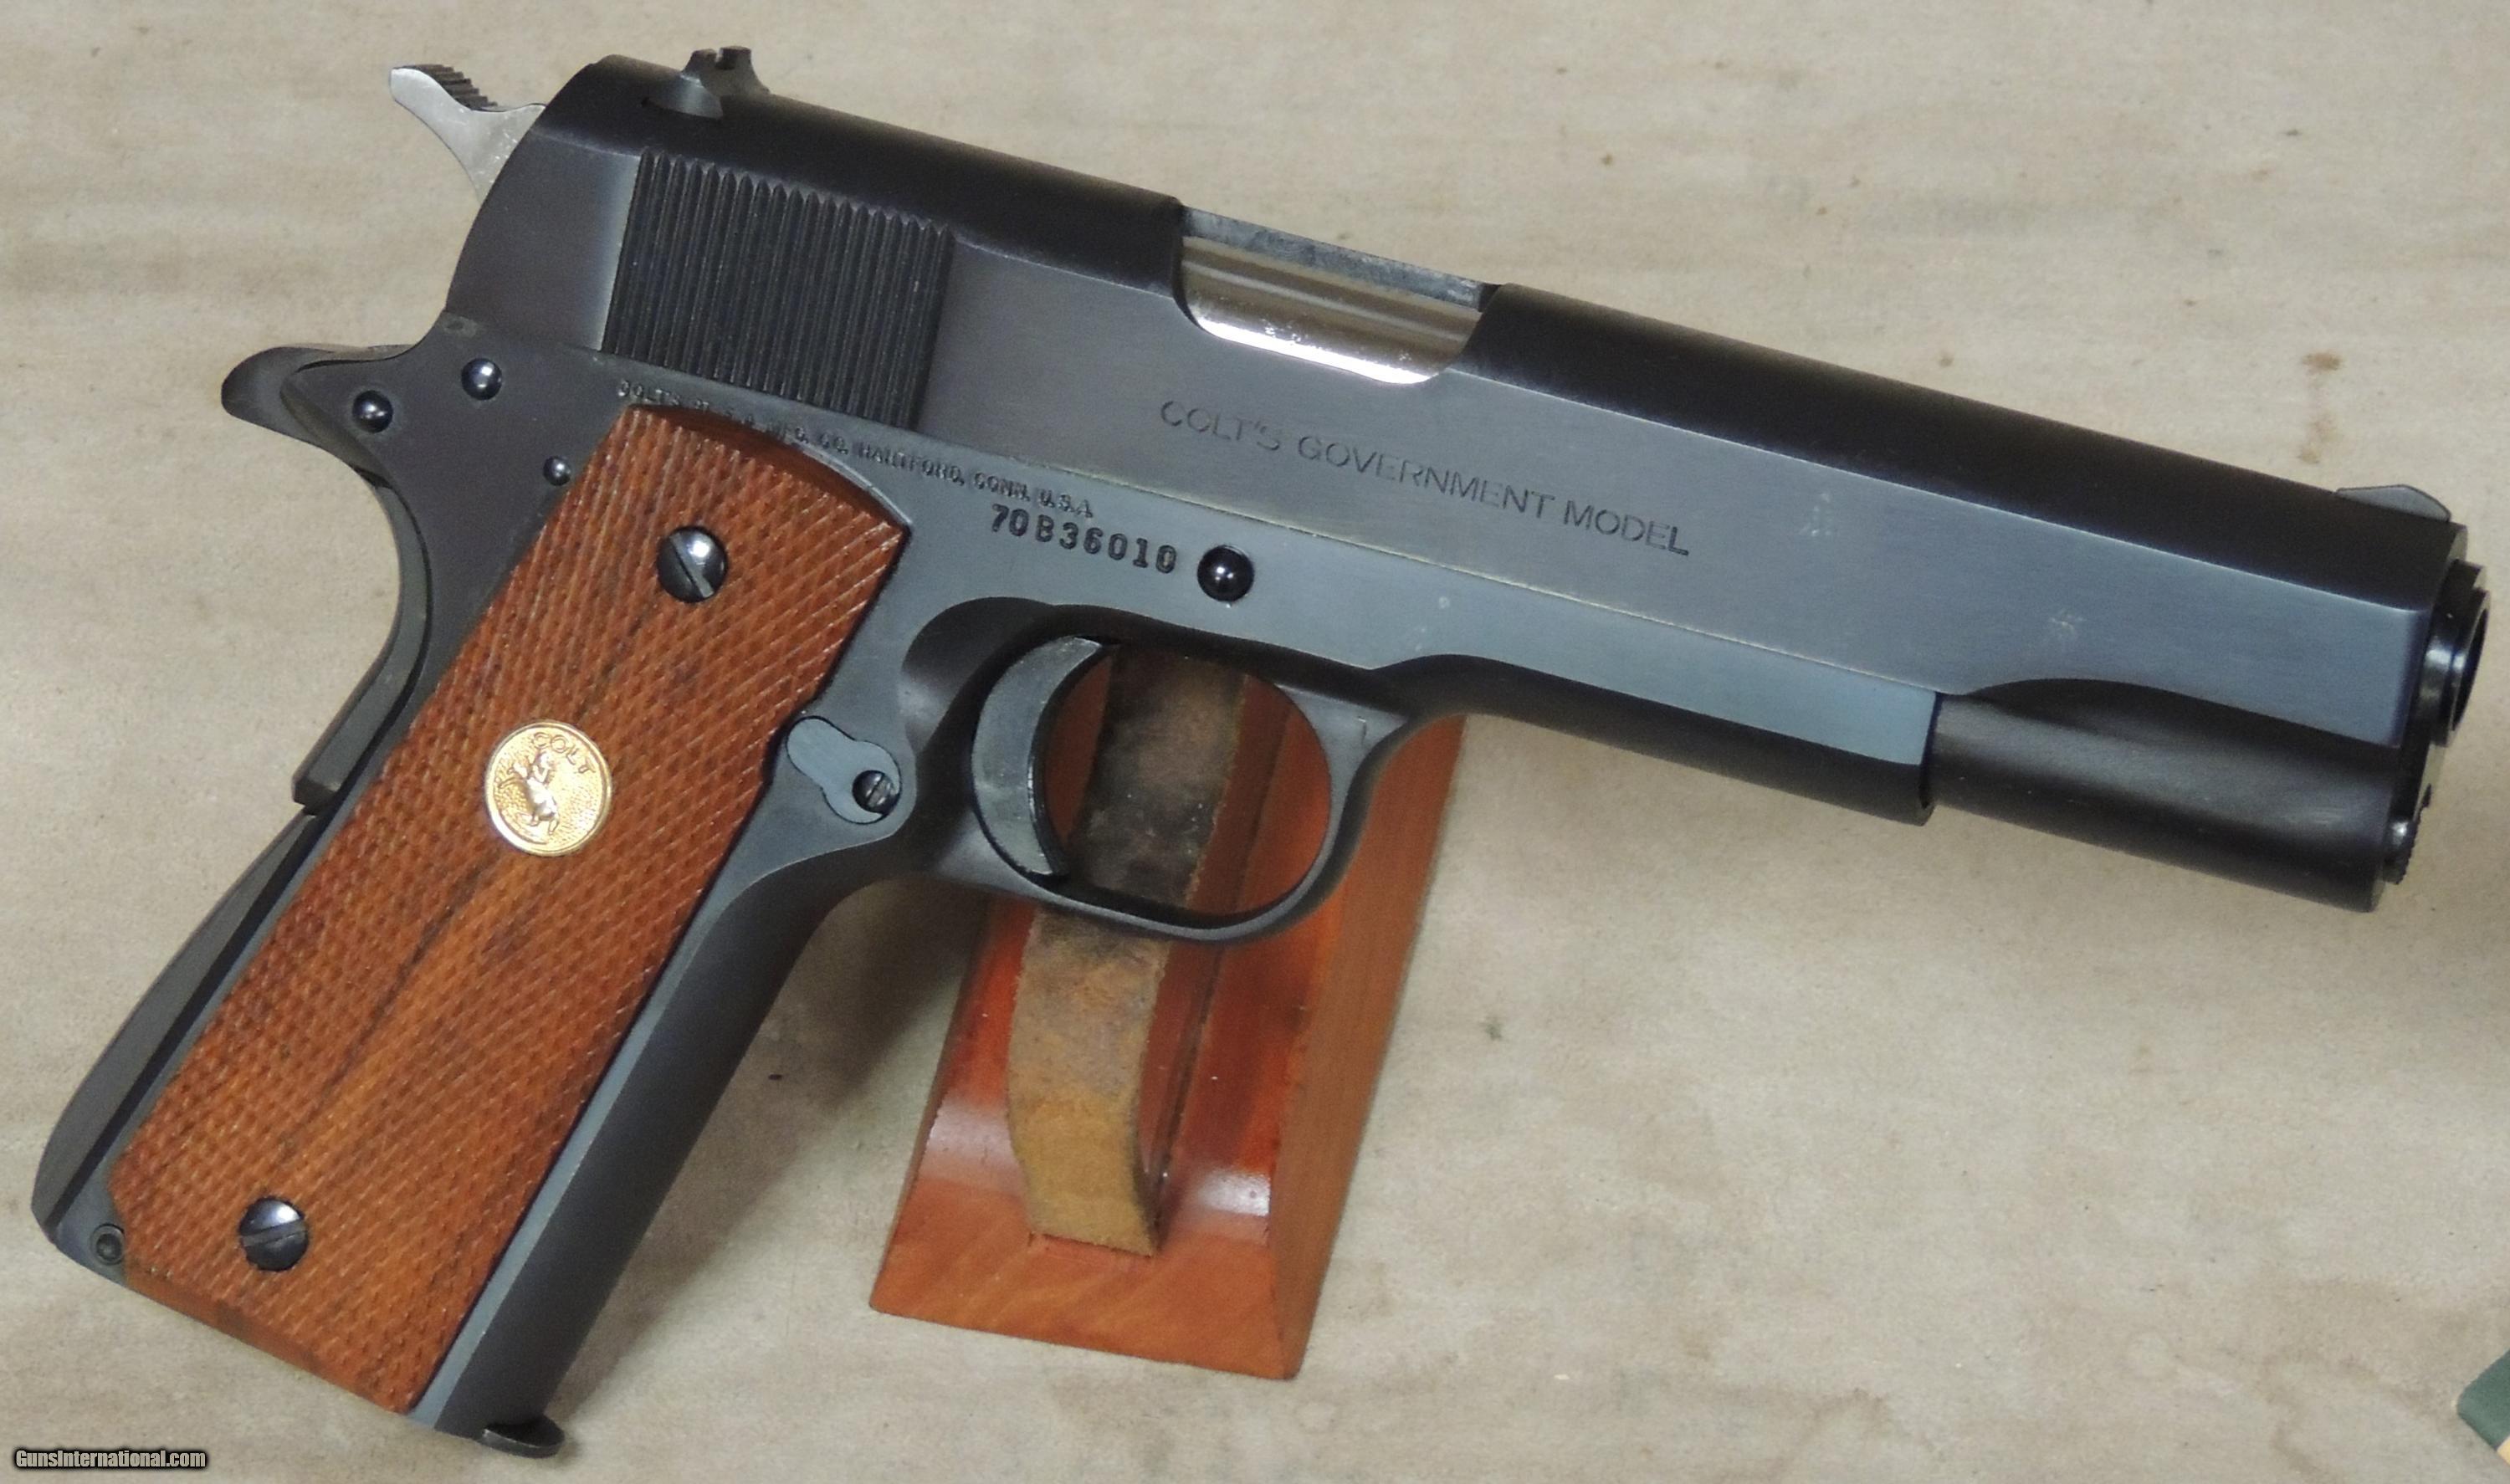 Colt-Government-MK-IV-Series-70-45-ACP-Caliber-1911-Pistol-NIB-S-N-70B36010_100888927_993_28EFCC2E51E6369D.JPG